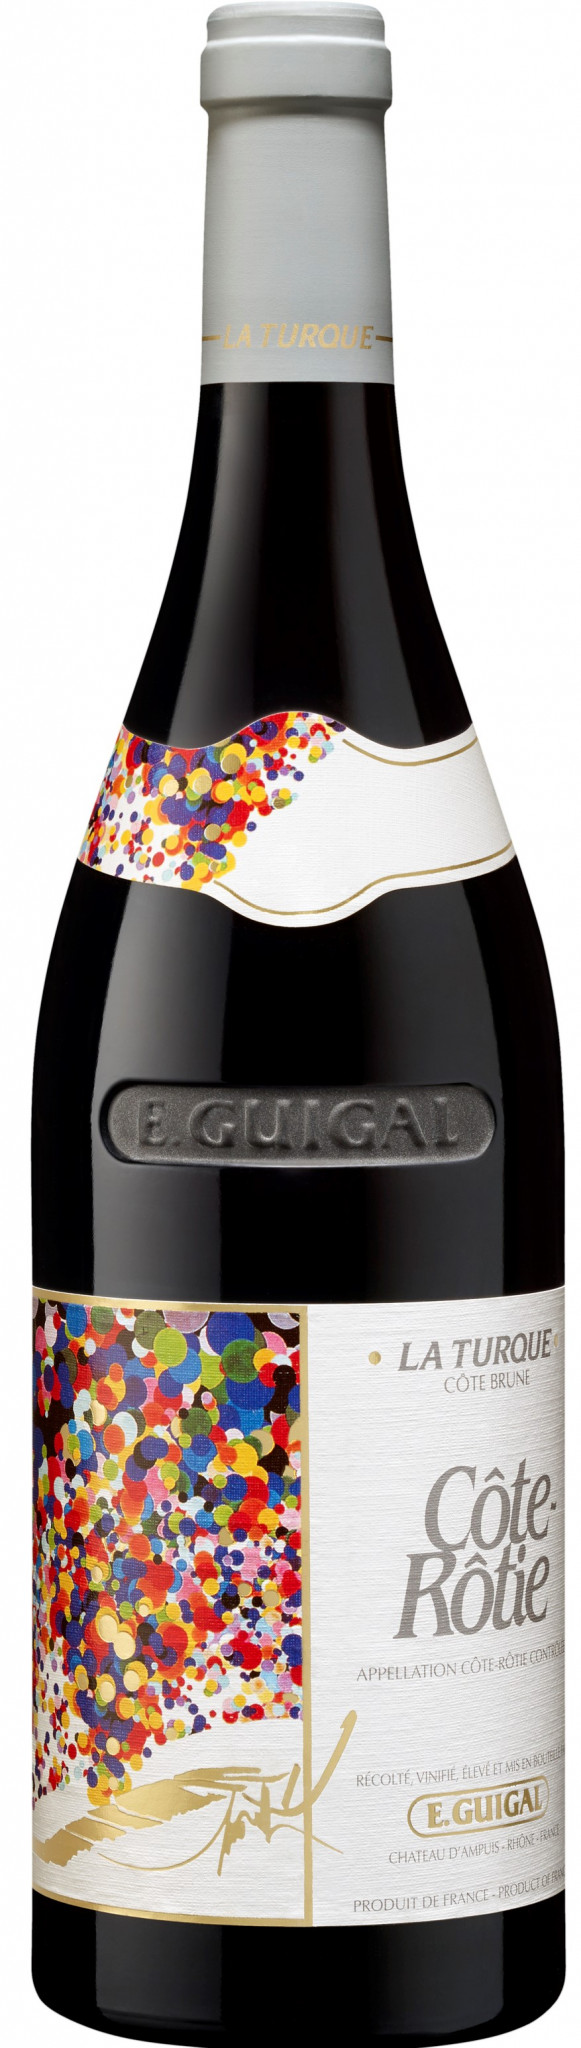 Guigal Cote-Rotie La Turque Wineaffair